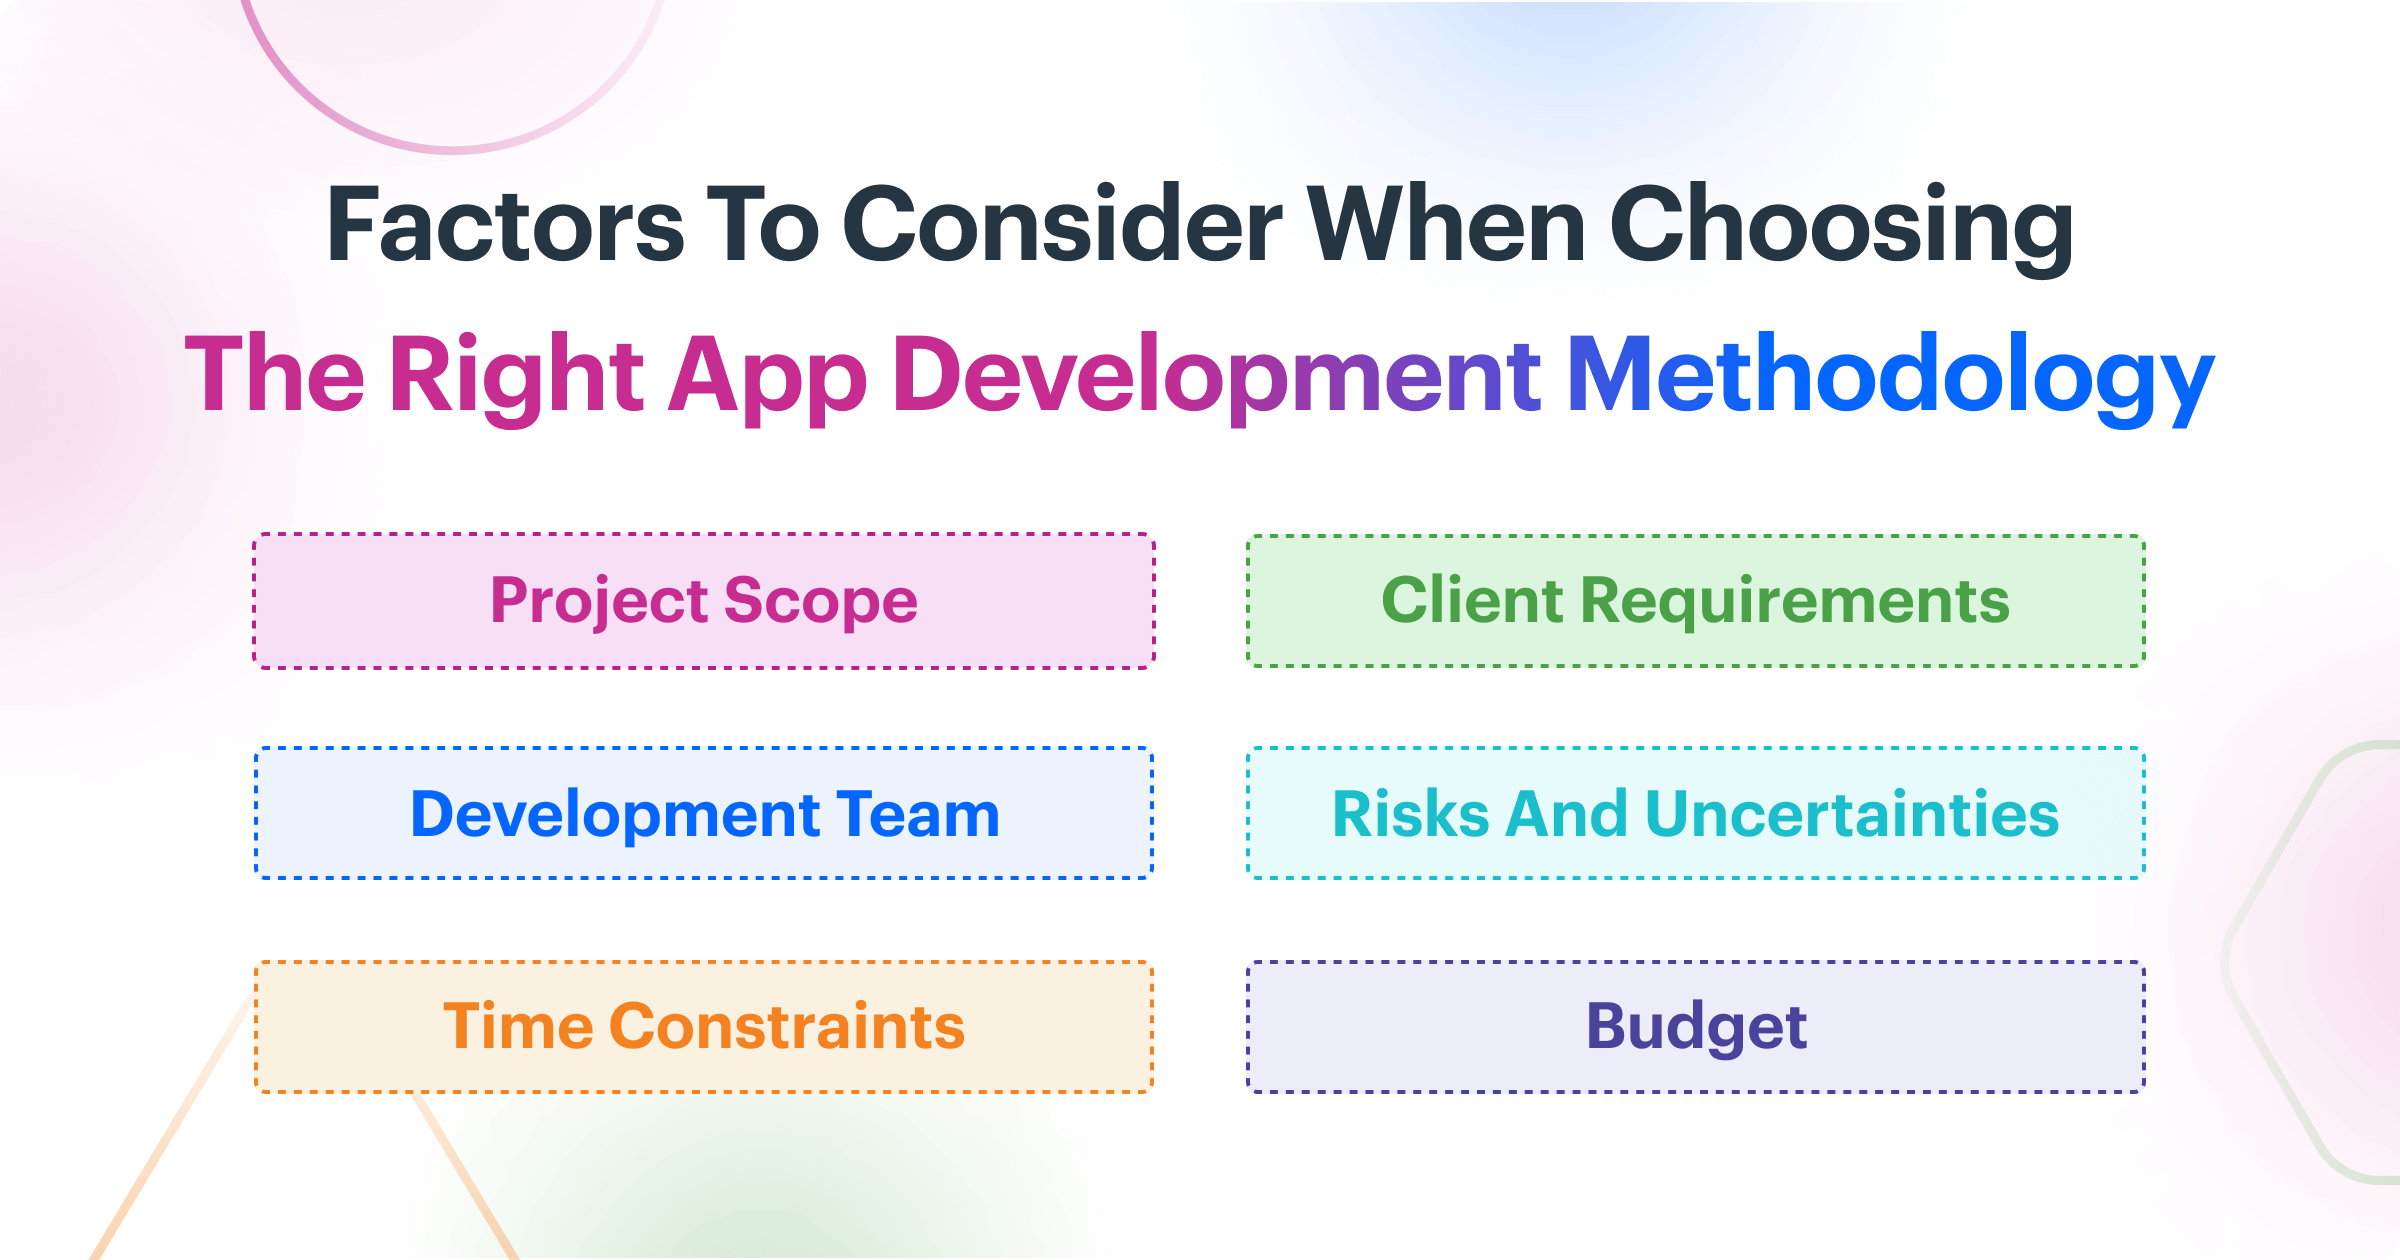 Factors to choose the app development methodology